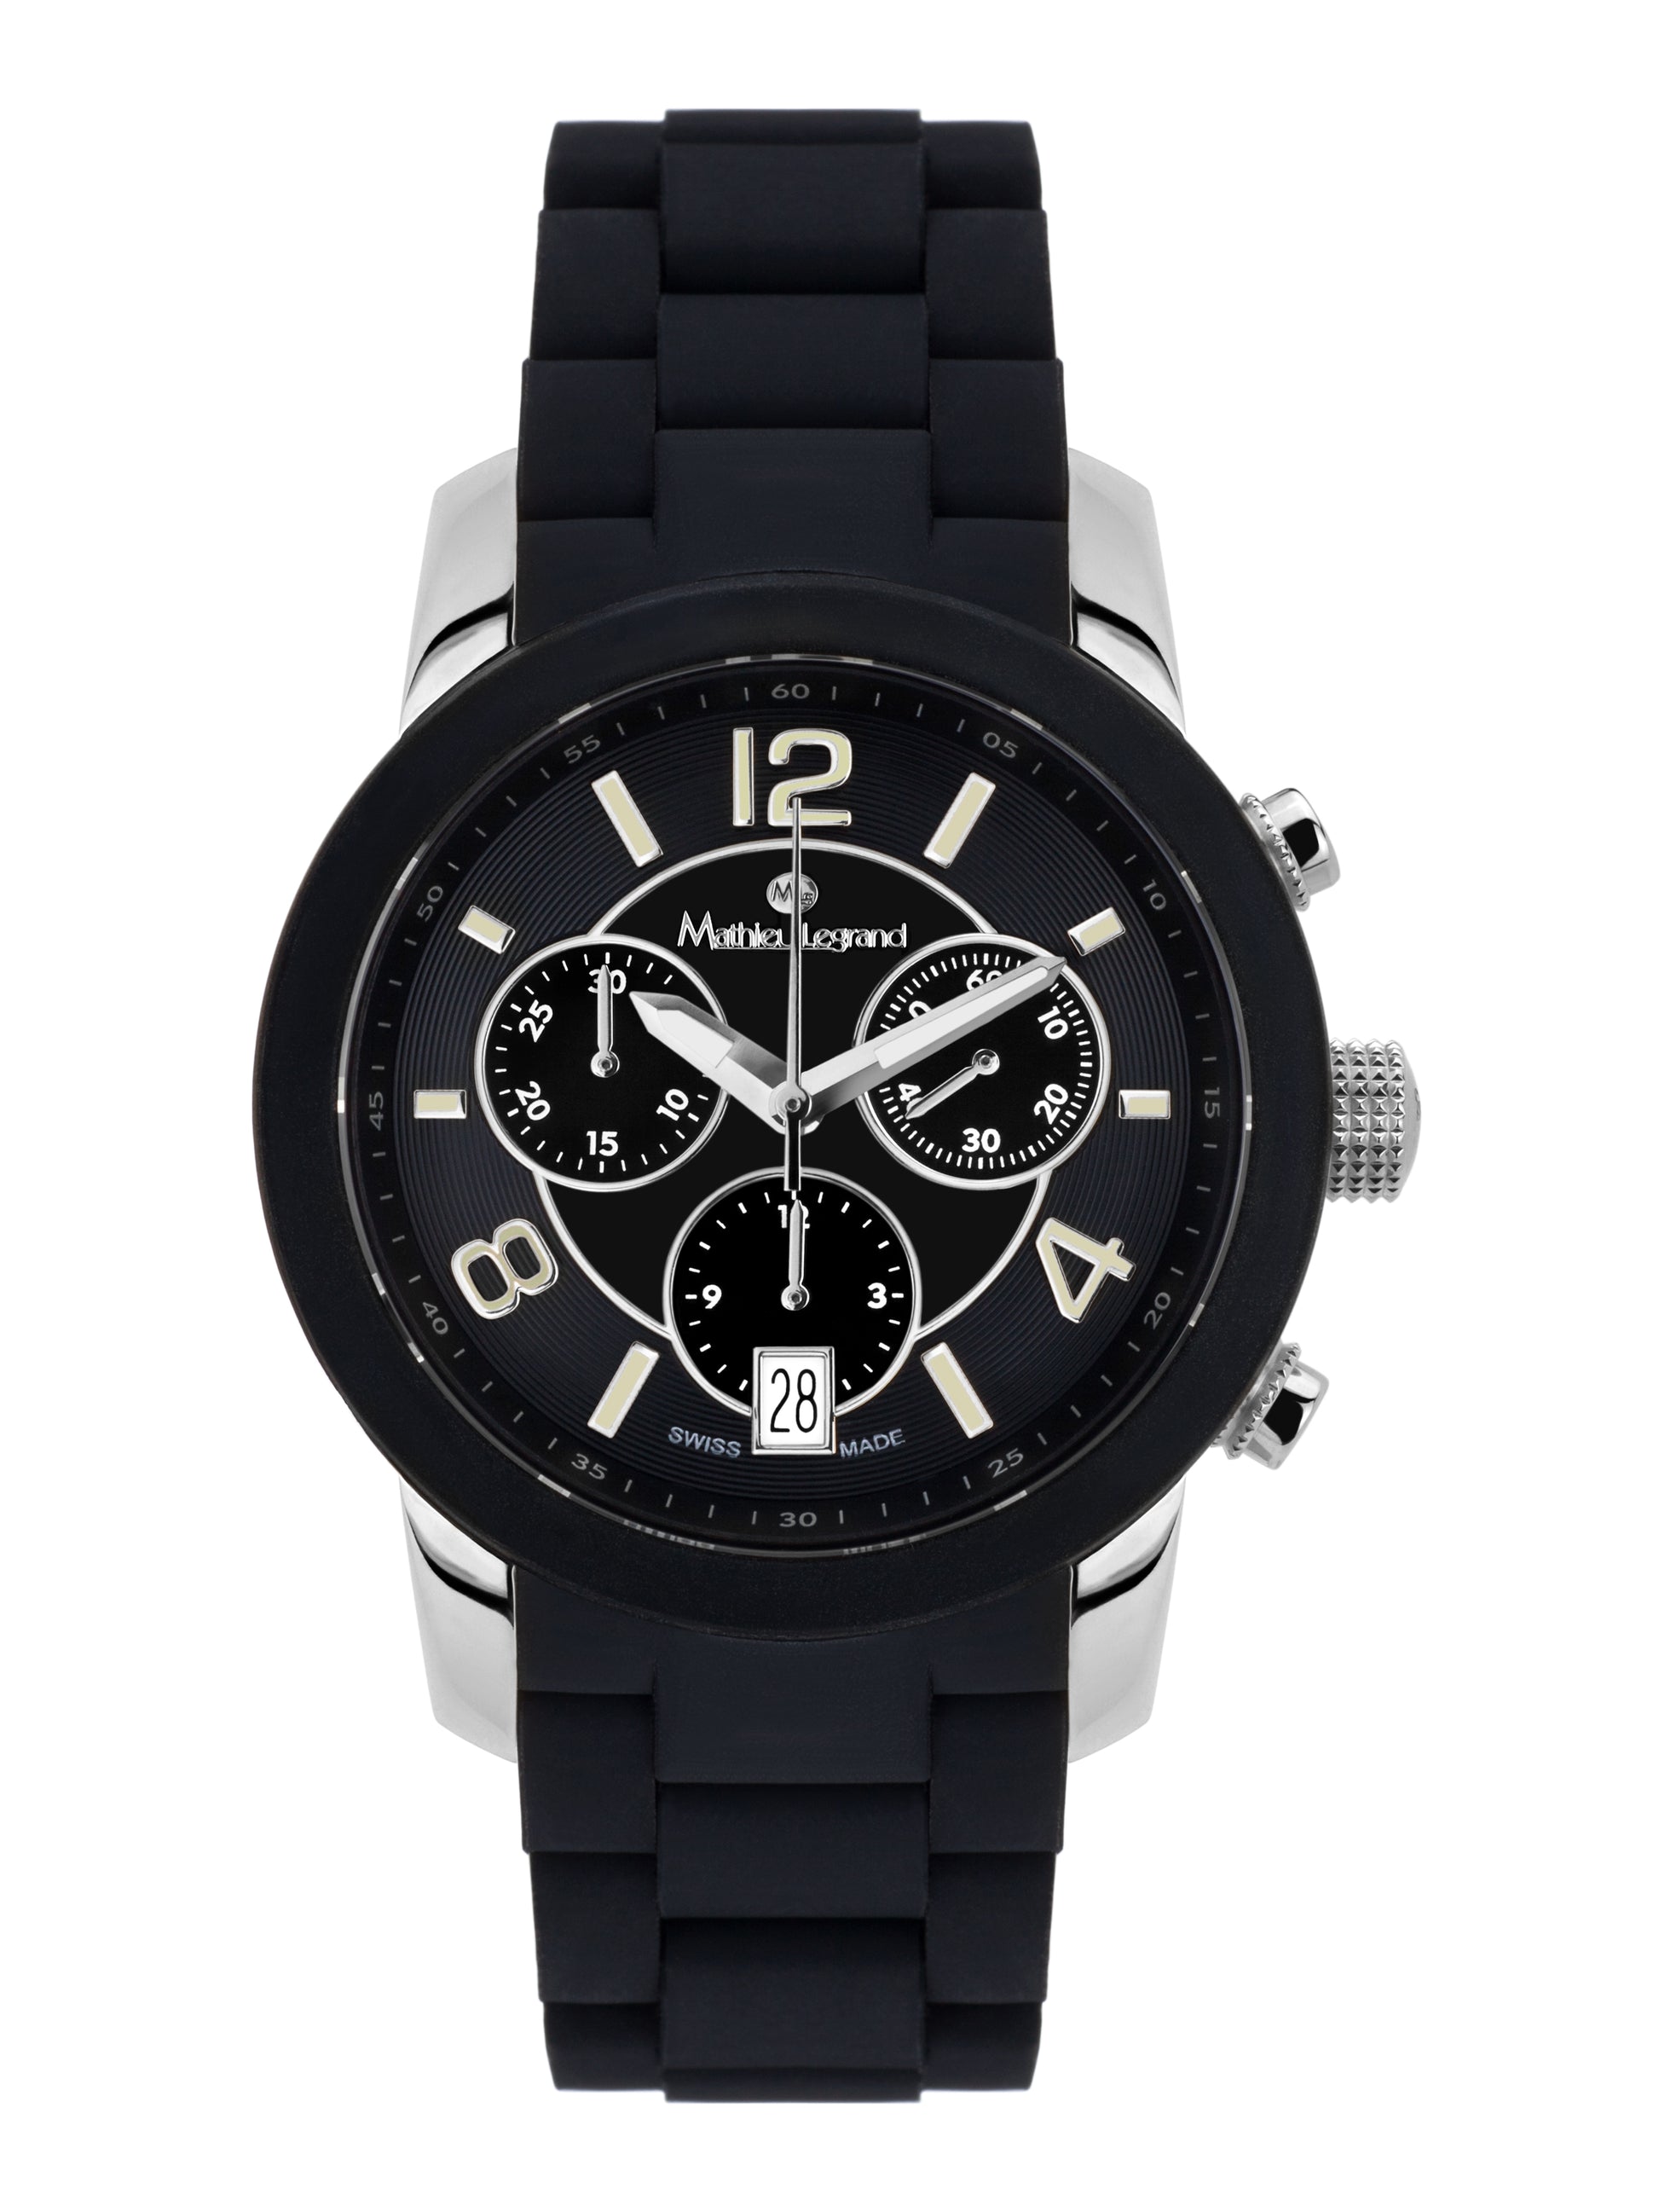 Automatic watches — Nacré — Mathieu Legrand — steel black silicone